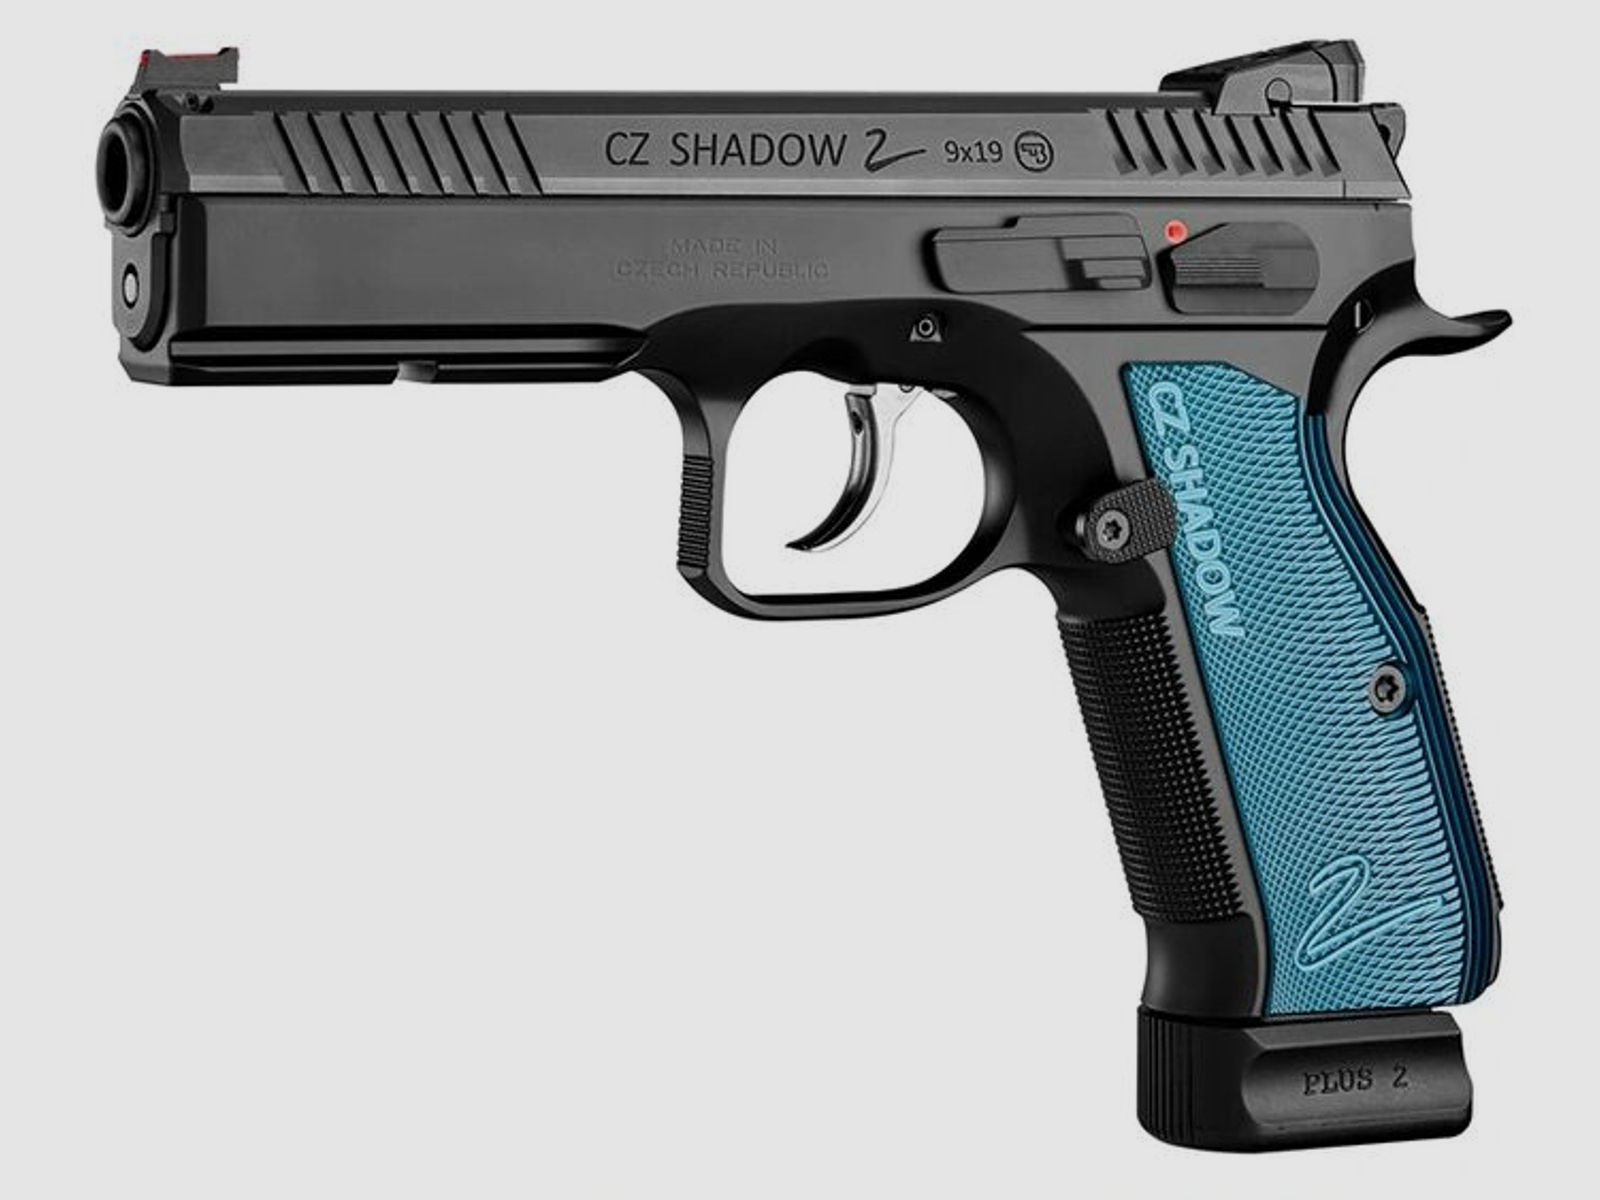 CZ SHADOW 2 Double Action Pistole CZ Shadow 2 SA/DA schwarz/blau 9mm Luger	 UVP: 1679  - Angebot